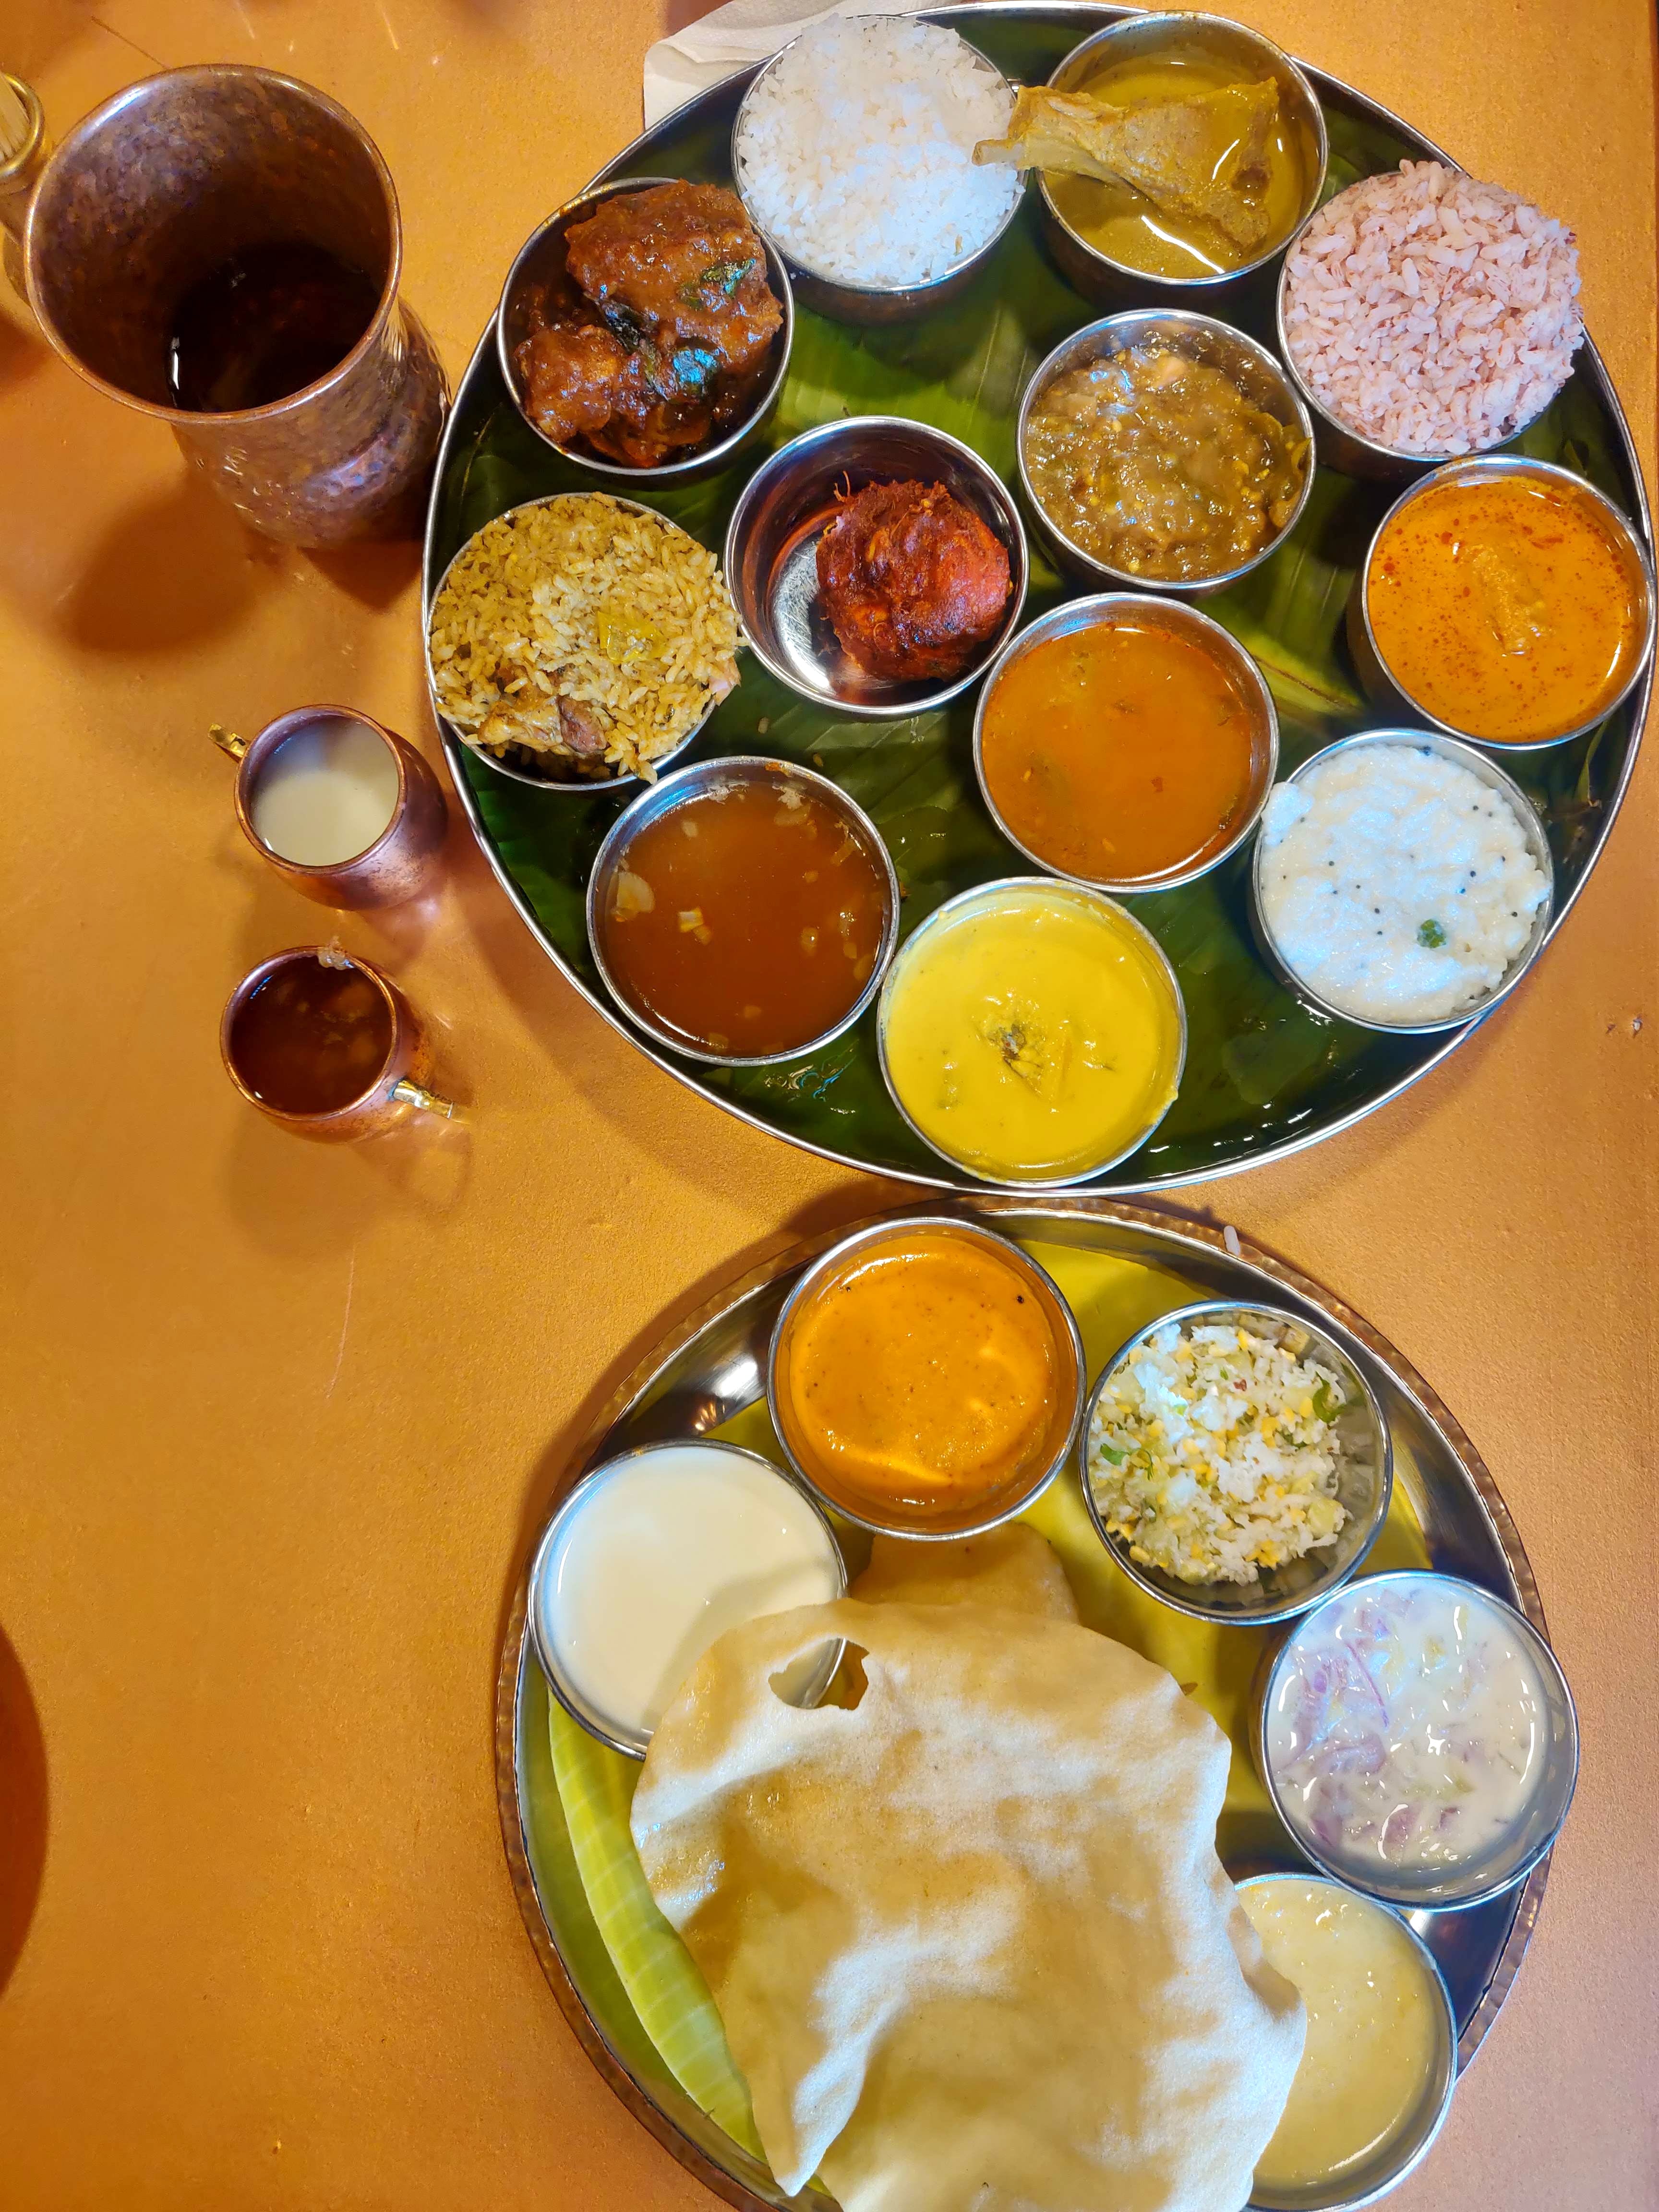 Dish,Food,Cuisine,Meal,Ingredient,Breakfast,Rajasthani cuisine,Indian cuisine,Vegetarian food,Produce